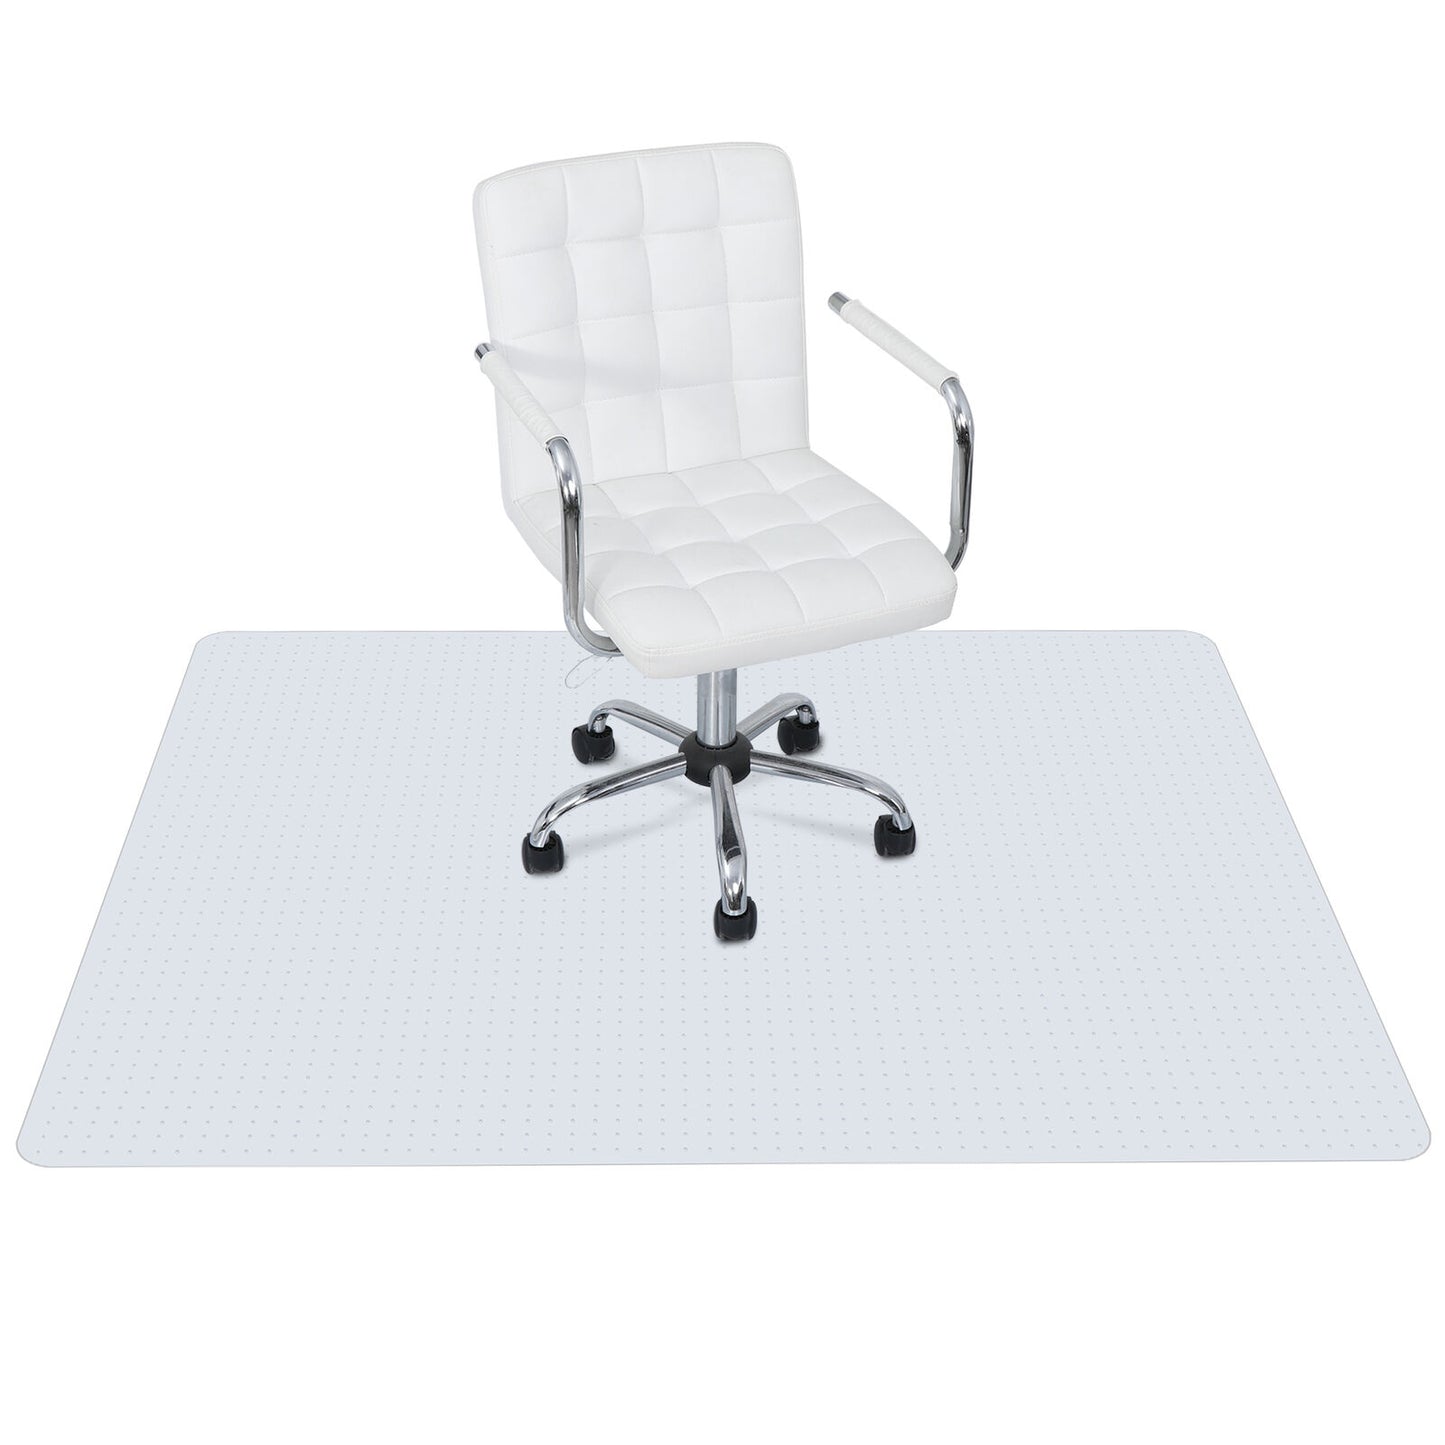 Transparent 60"Chair Mat Thick Feet Non-slip PVC Soft Desk Protect Floor Carpert